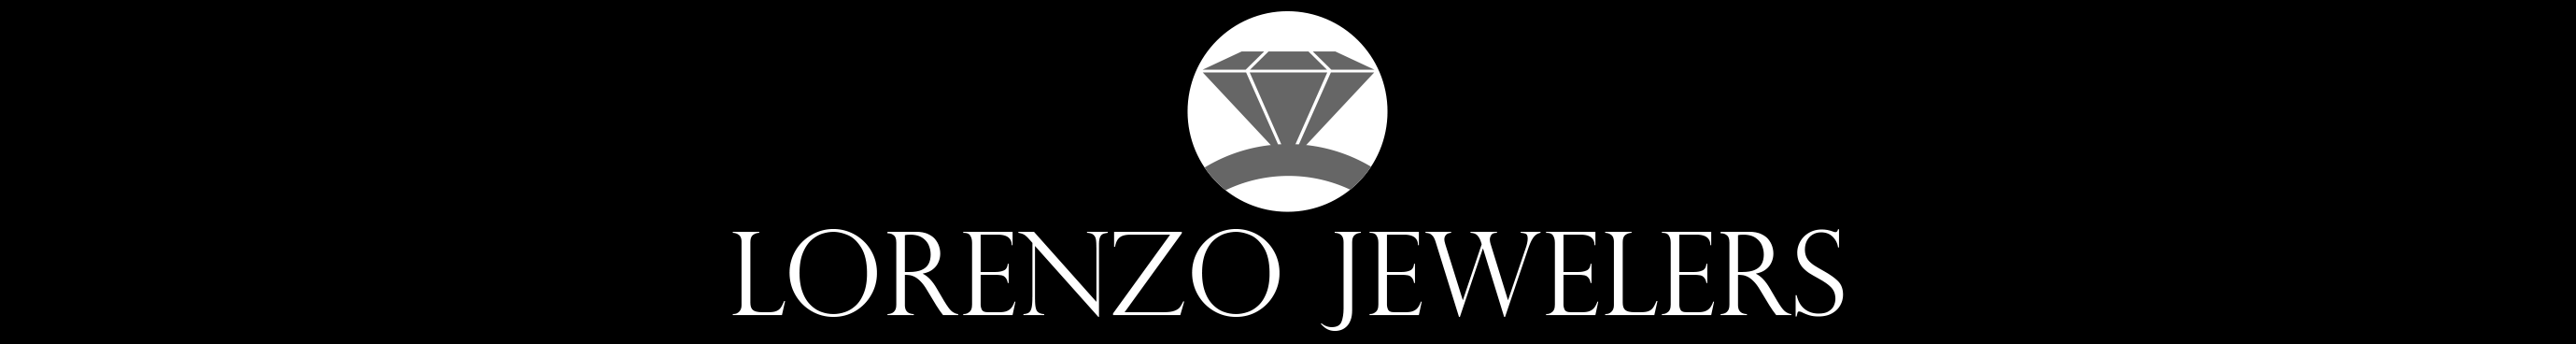 Lorenzo Jewelers Logo